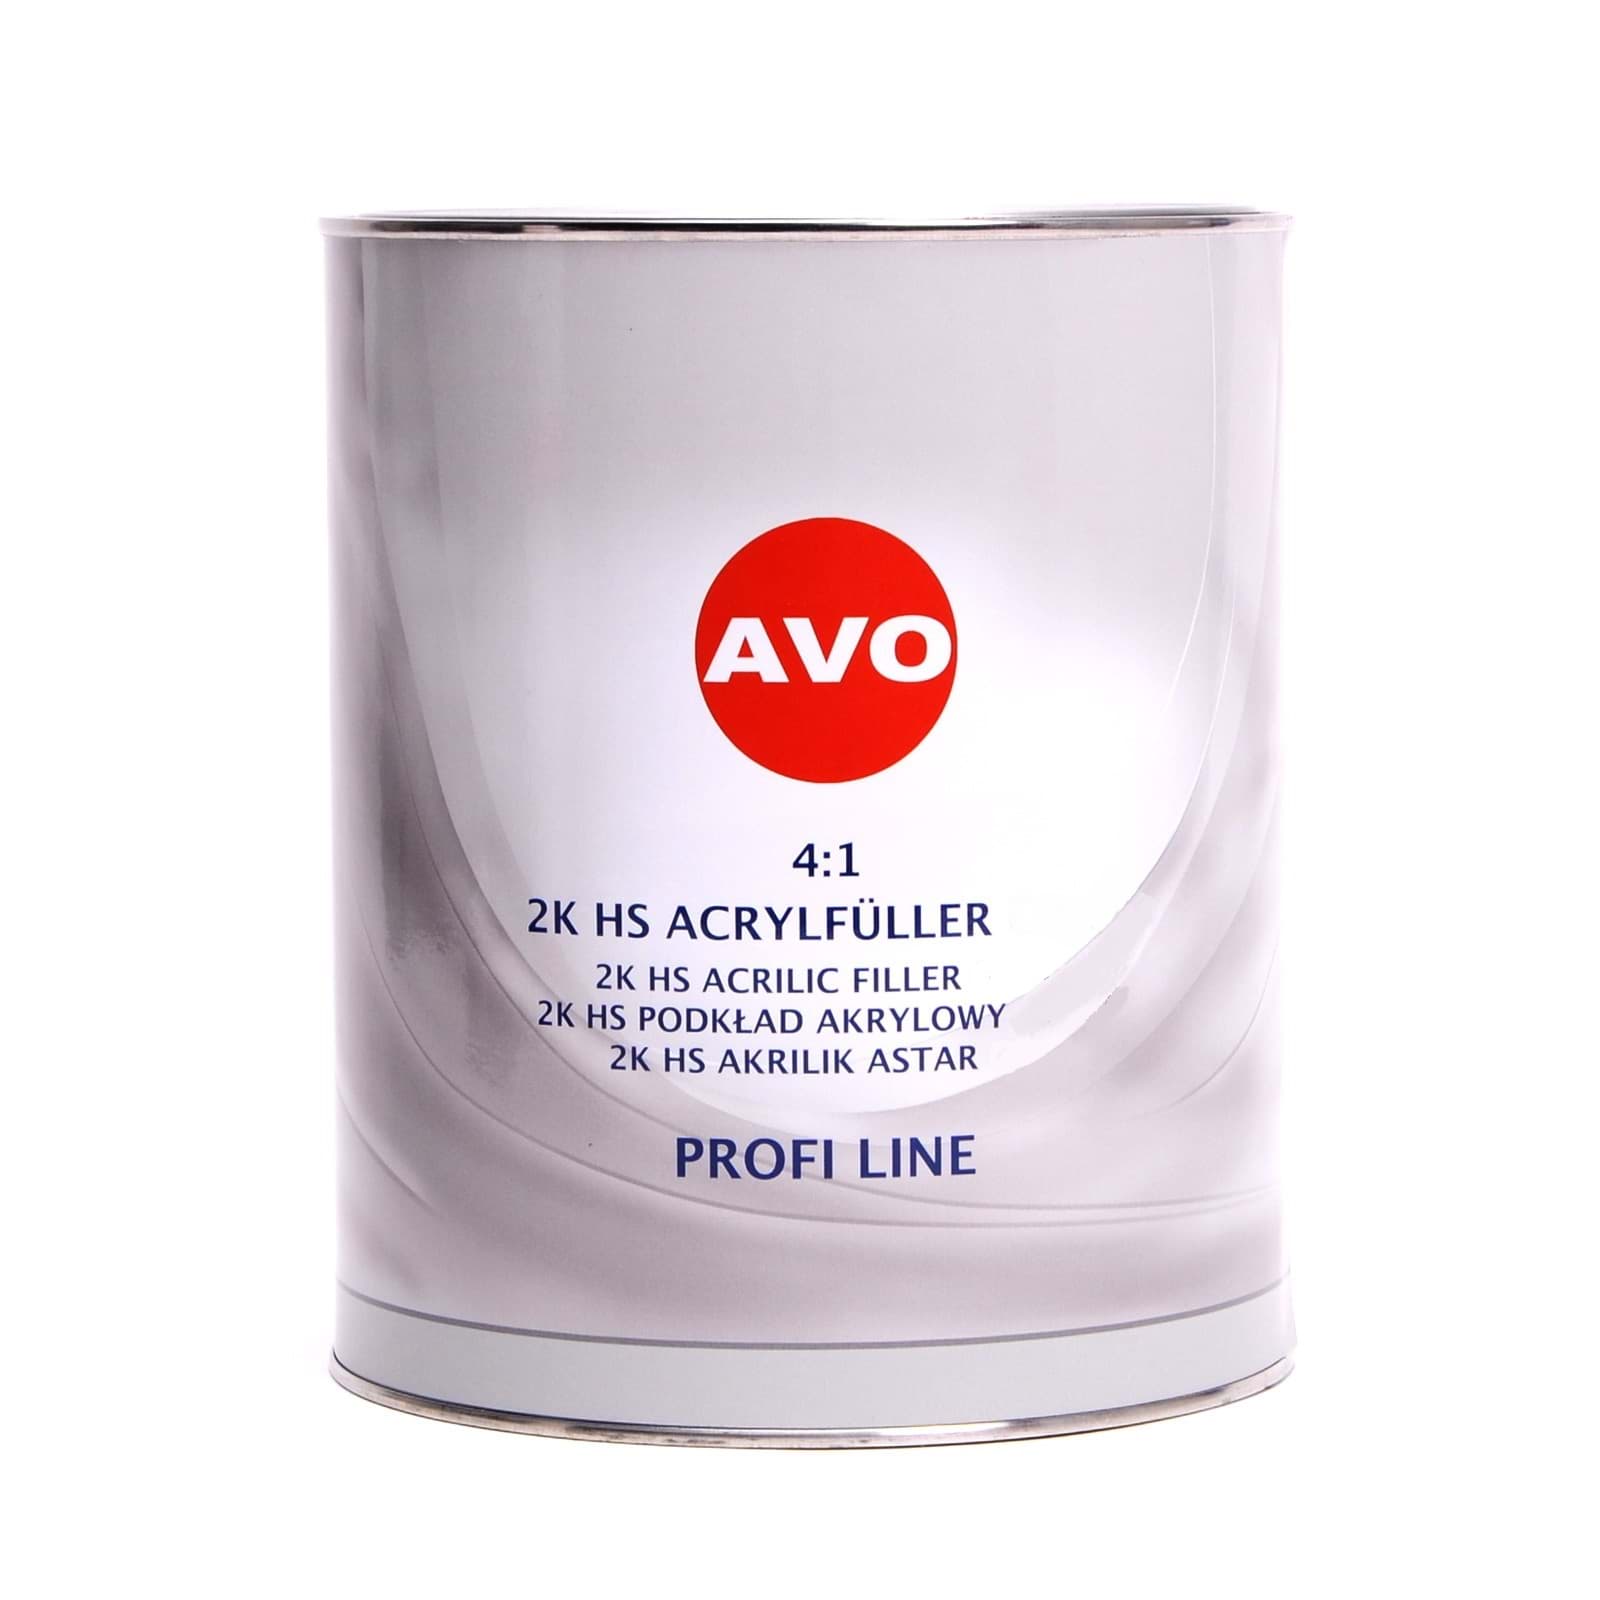 Afbeelding van AVO 2K HS 4:1 Grundier Füller  Acrylfiller grau 4 Liter